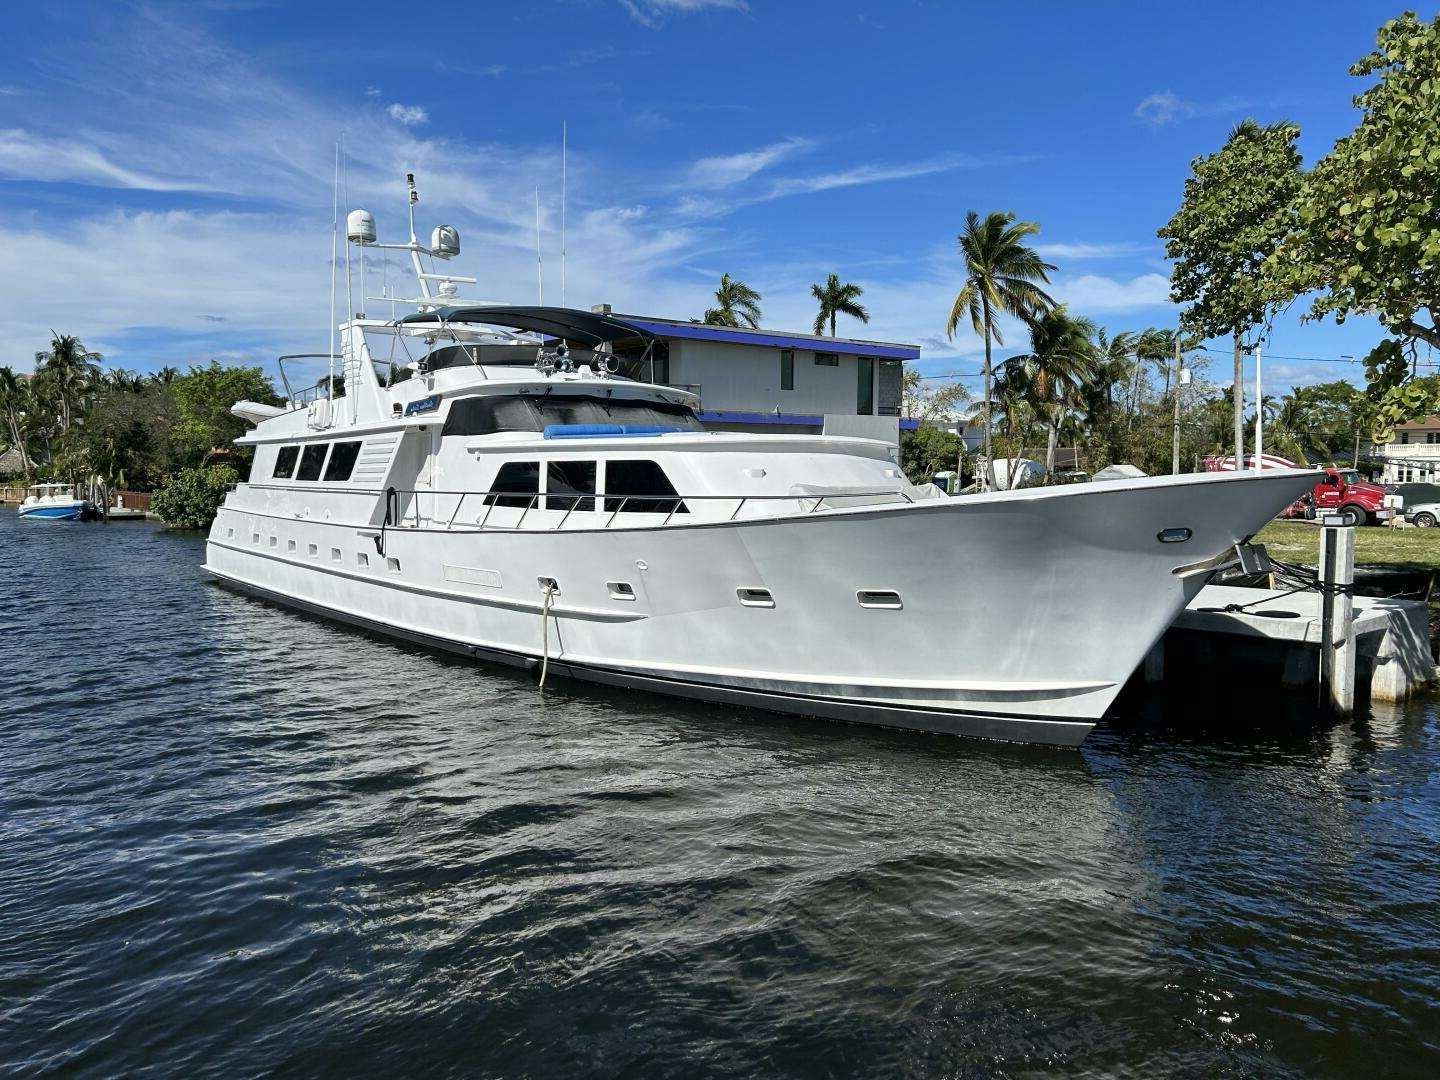 Caribbean soul
Yacht for Sale